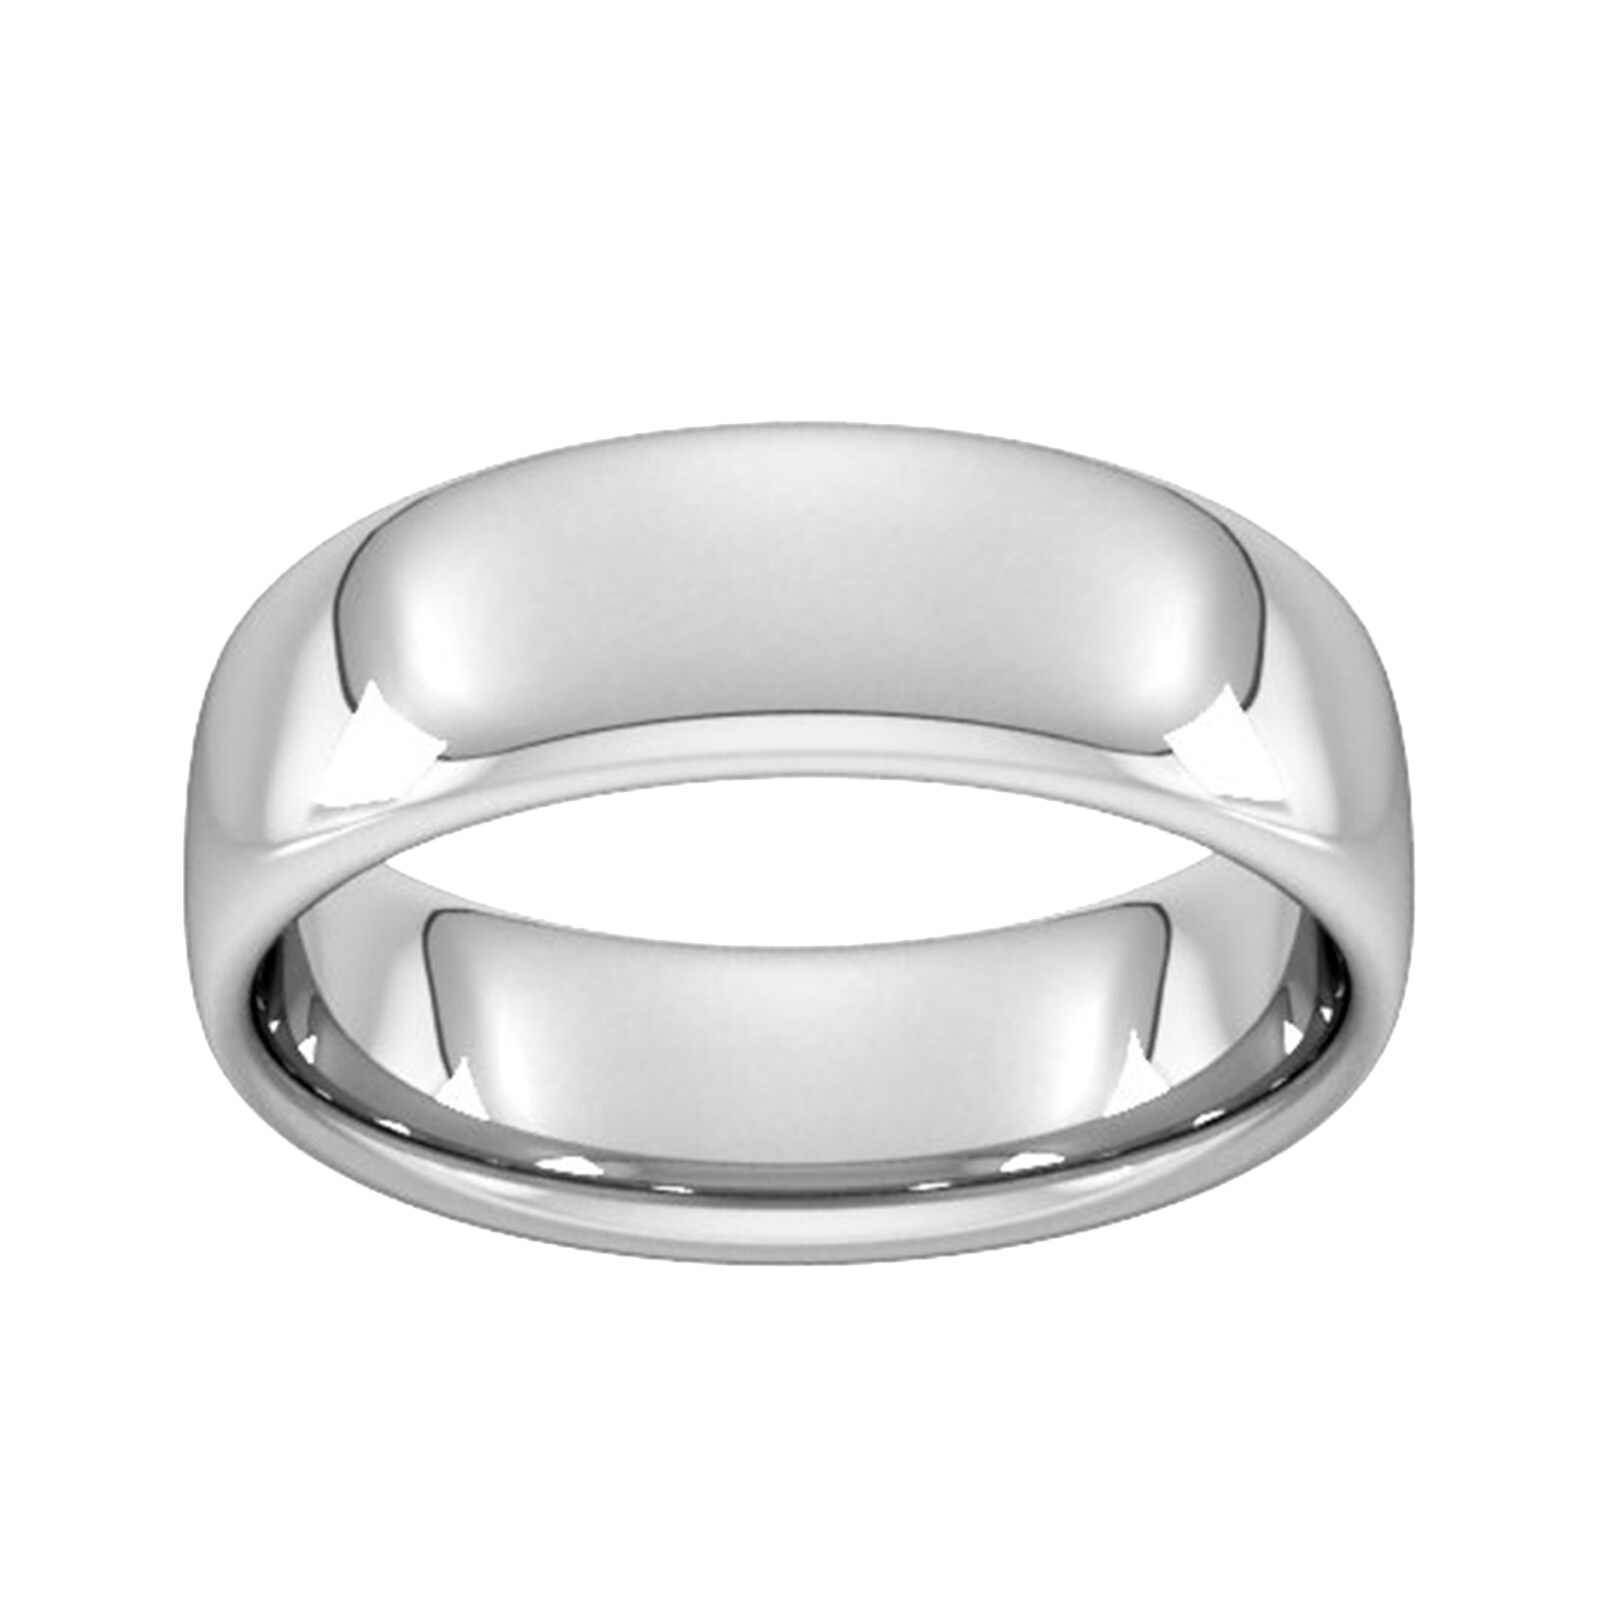 7mm Slight Court Heavy Wedding Ring In 9 Carat White Gold - Ring Size N